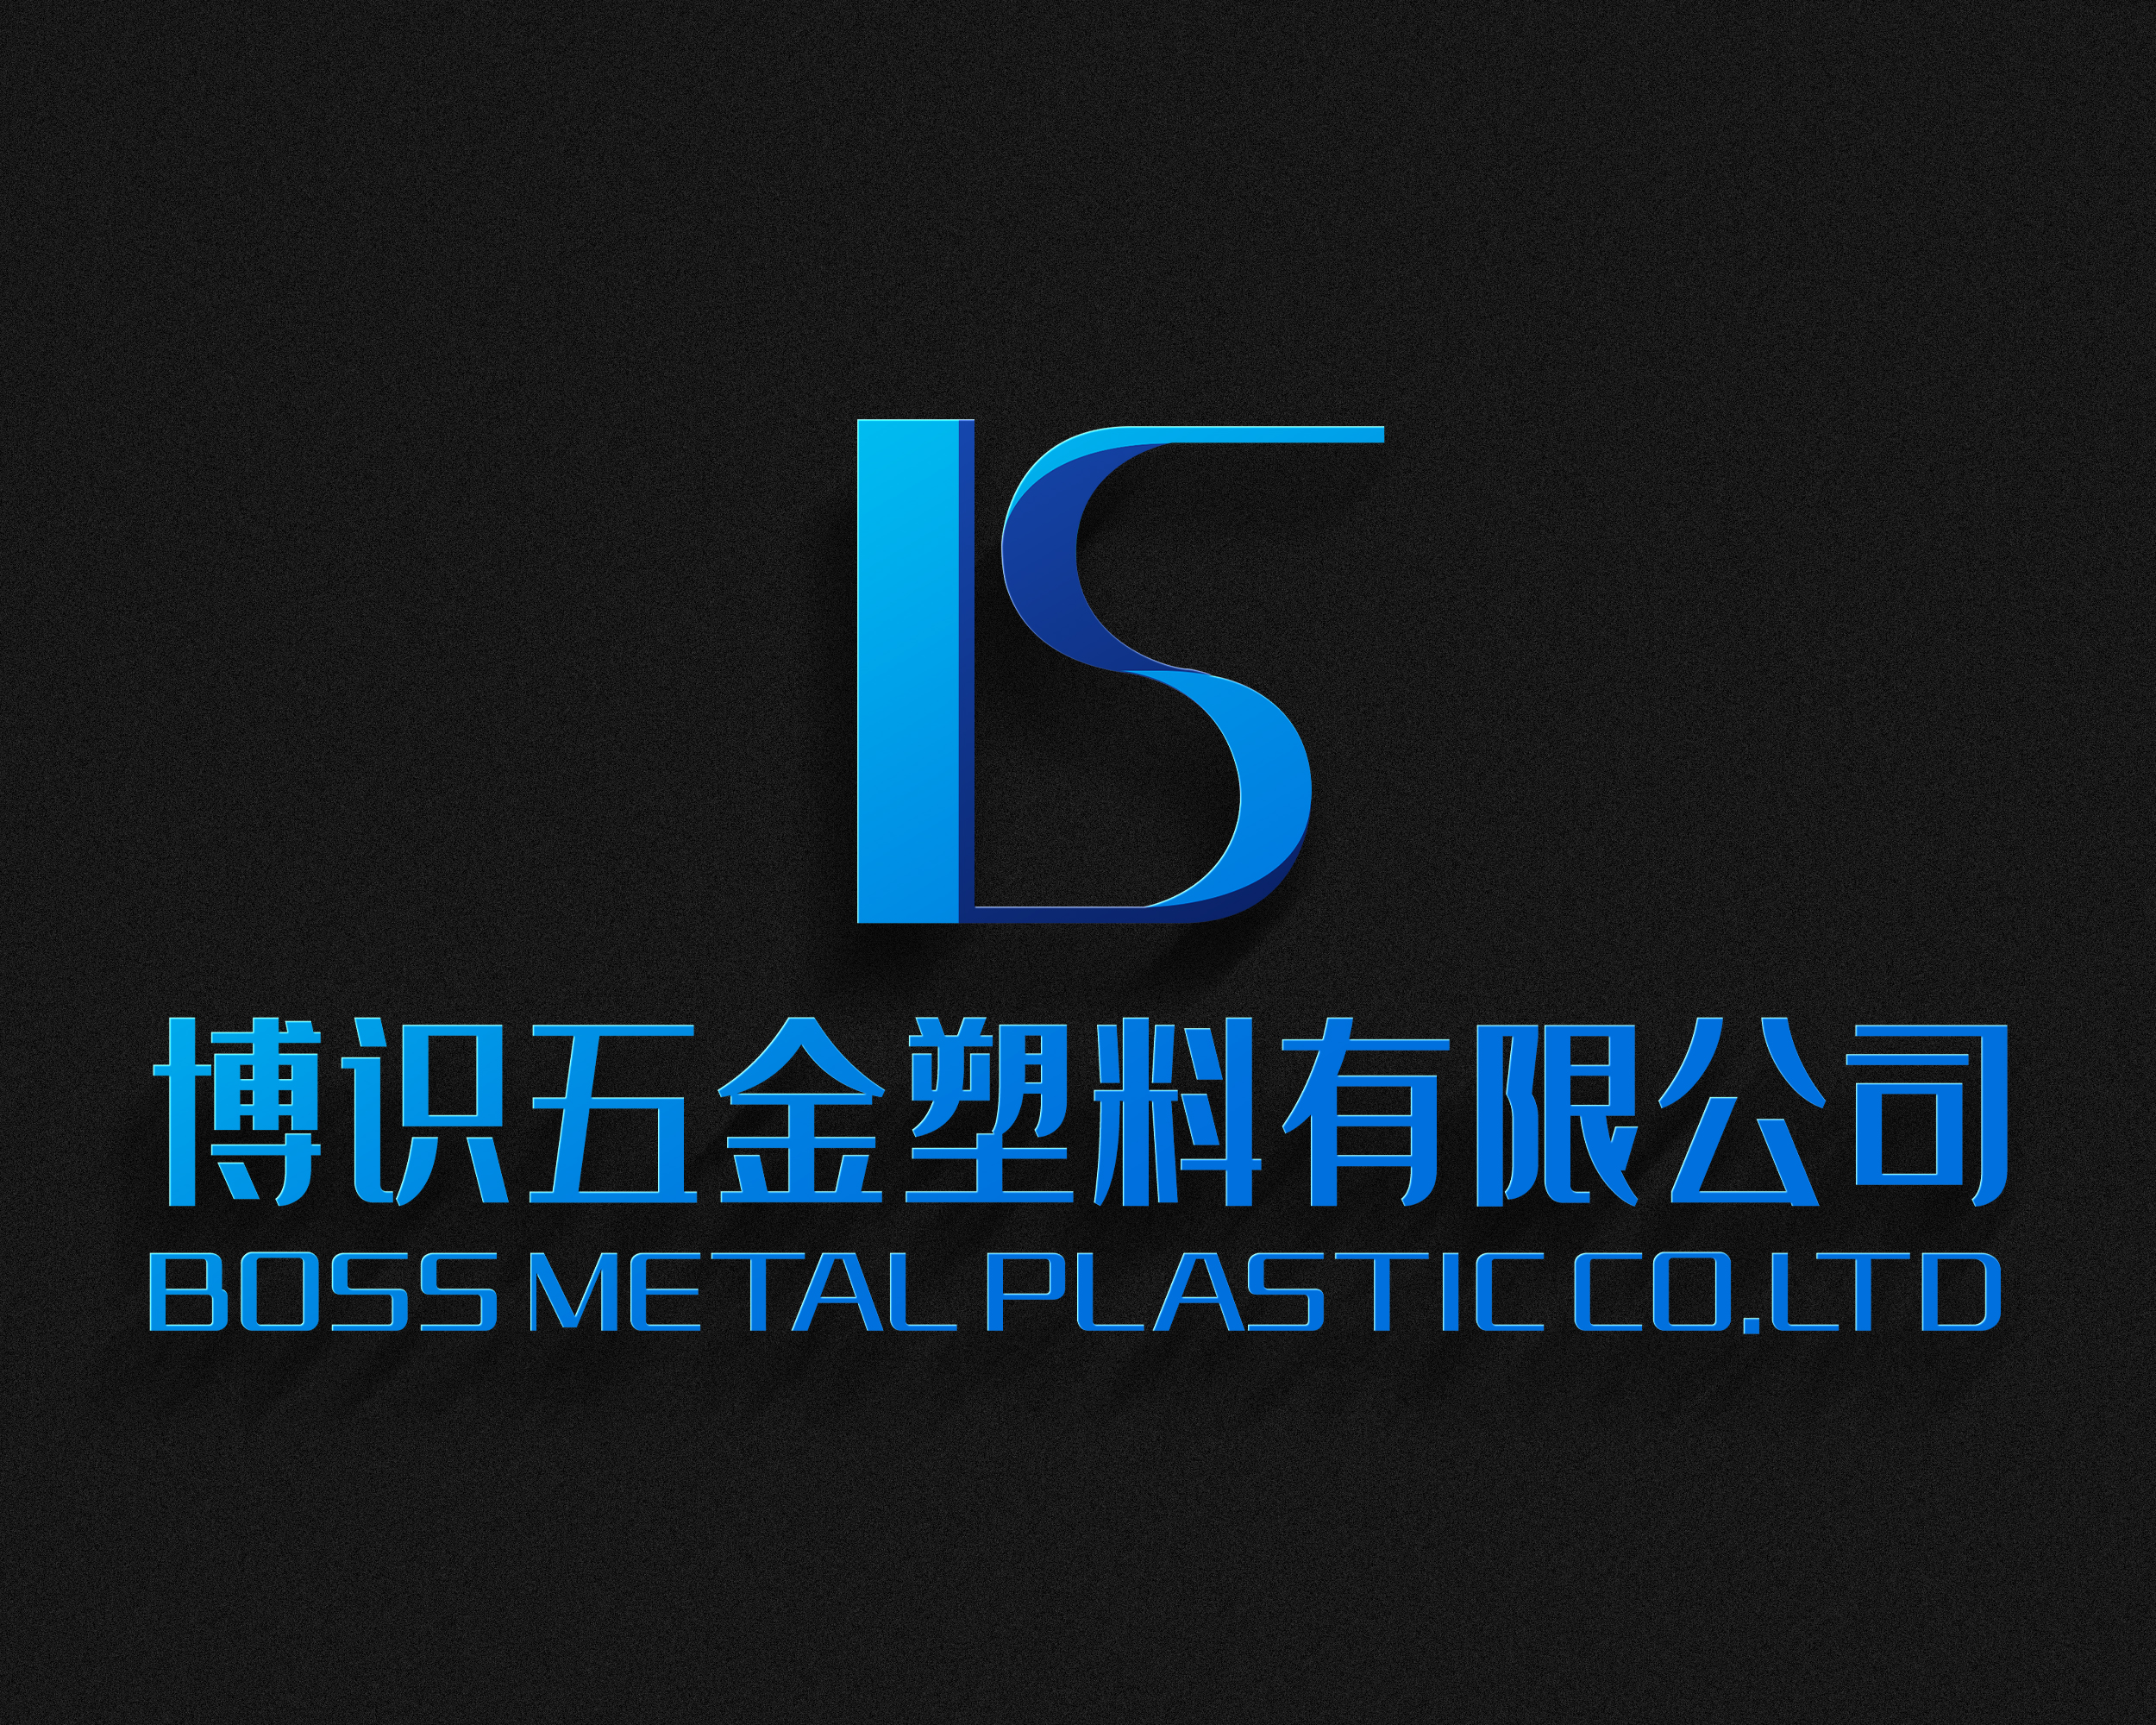 BOSS METAL AND PLASTIC CO. LTD